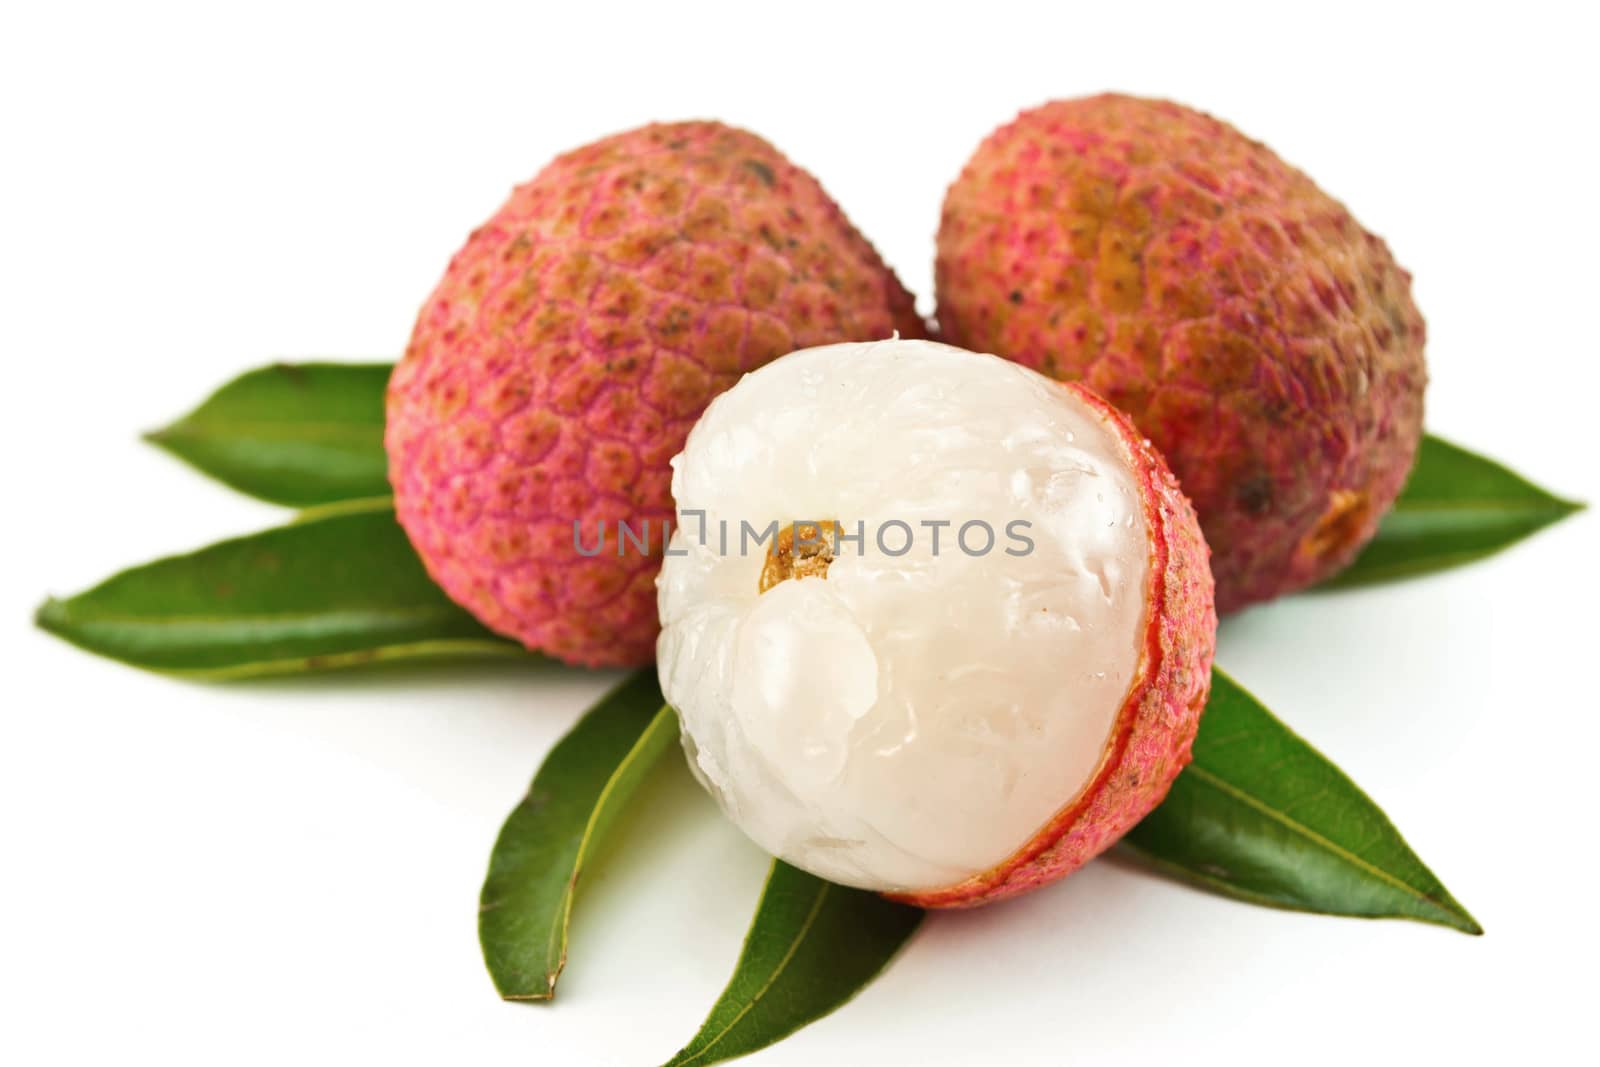 fresh lychees on white background